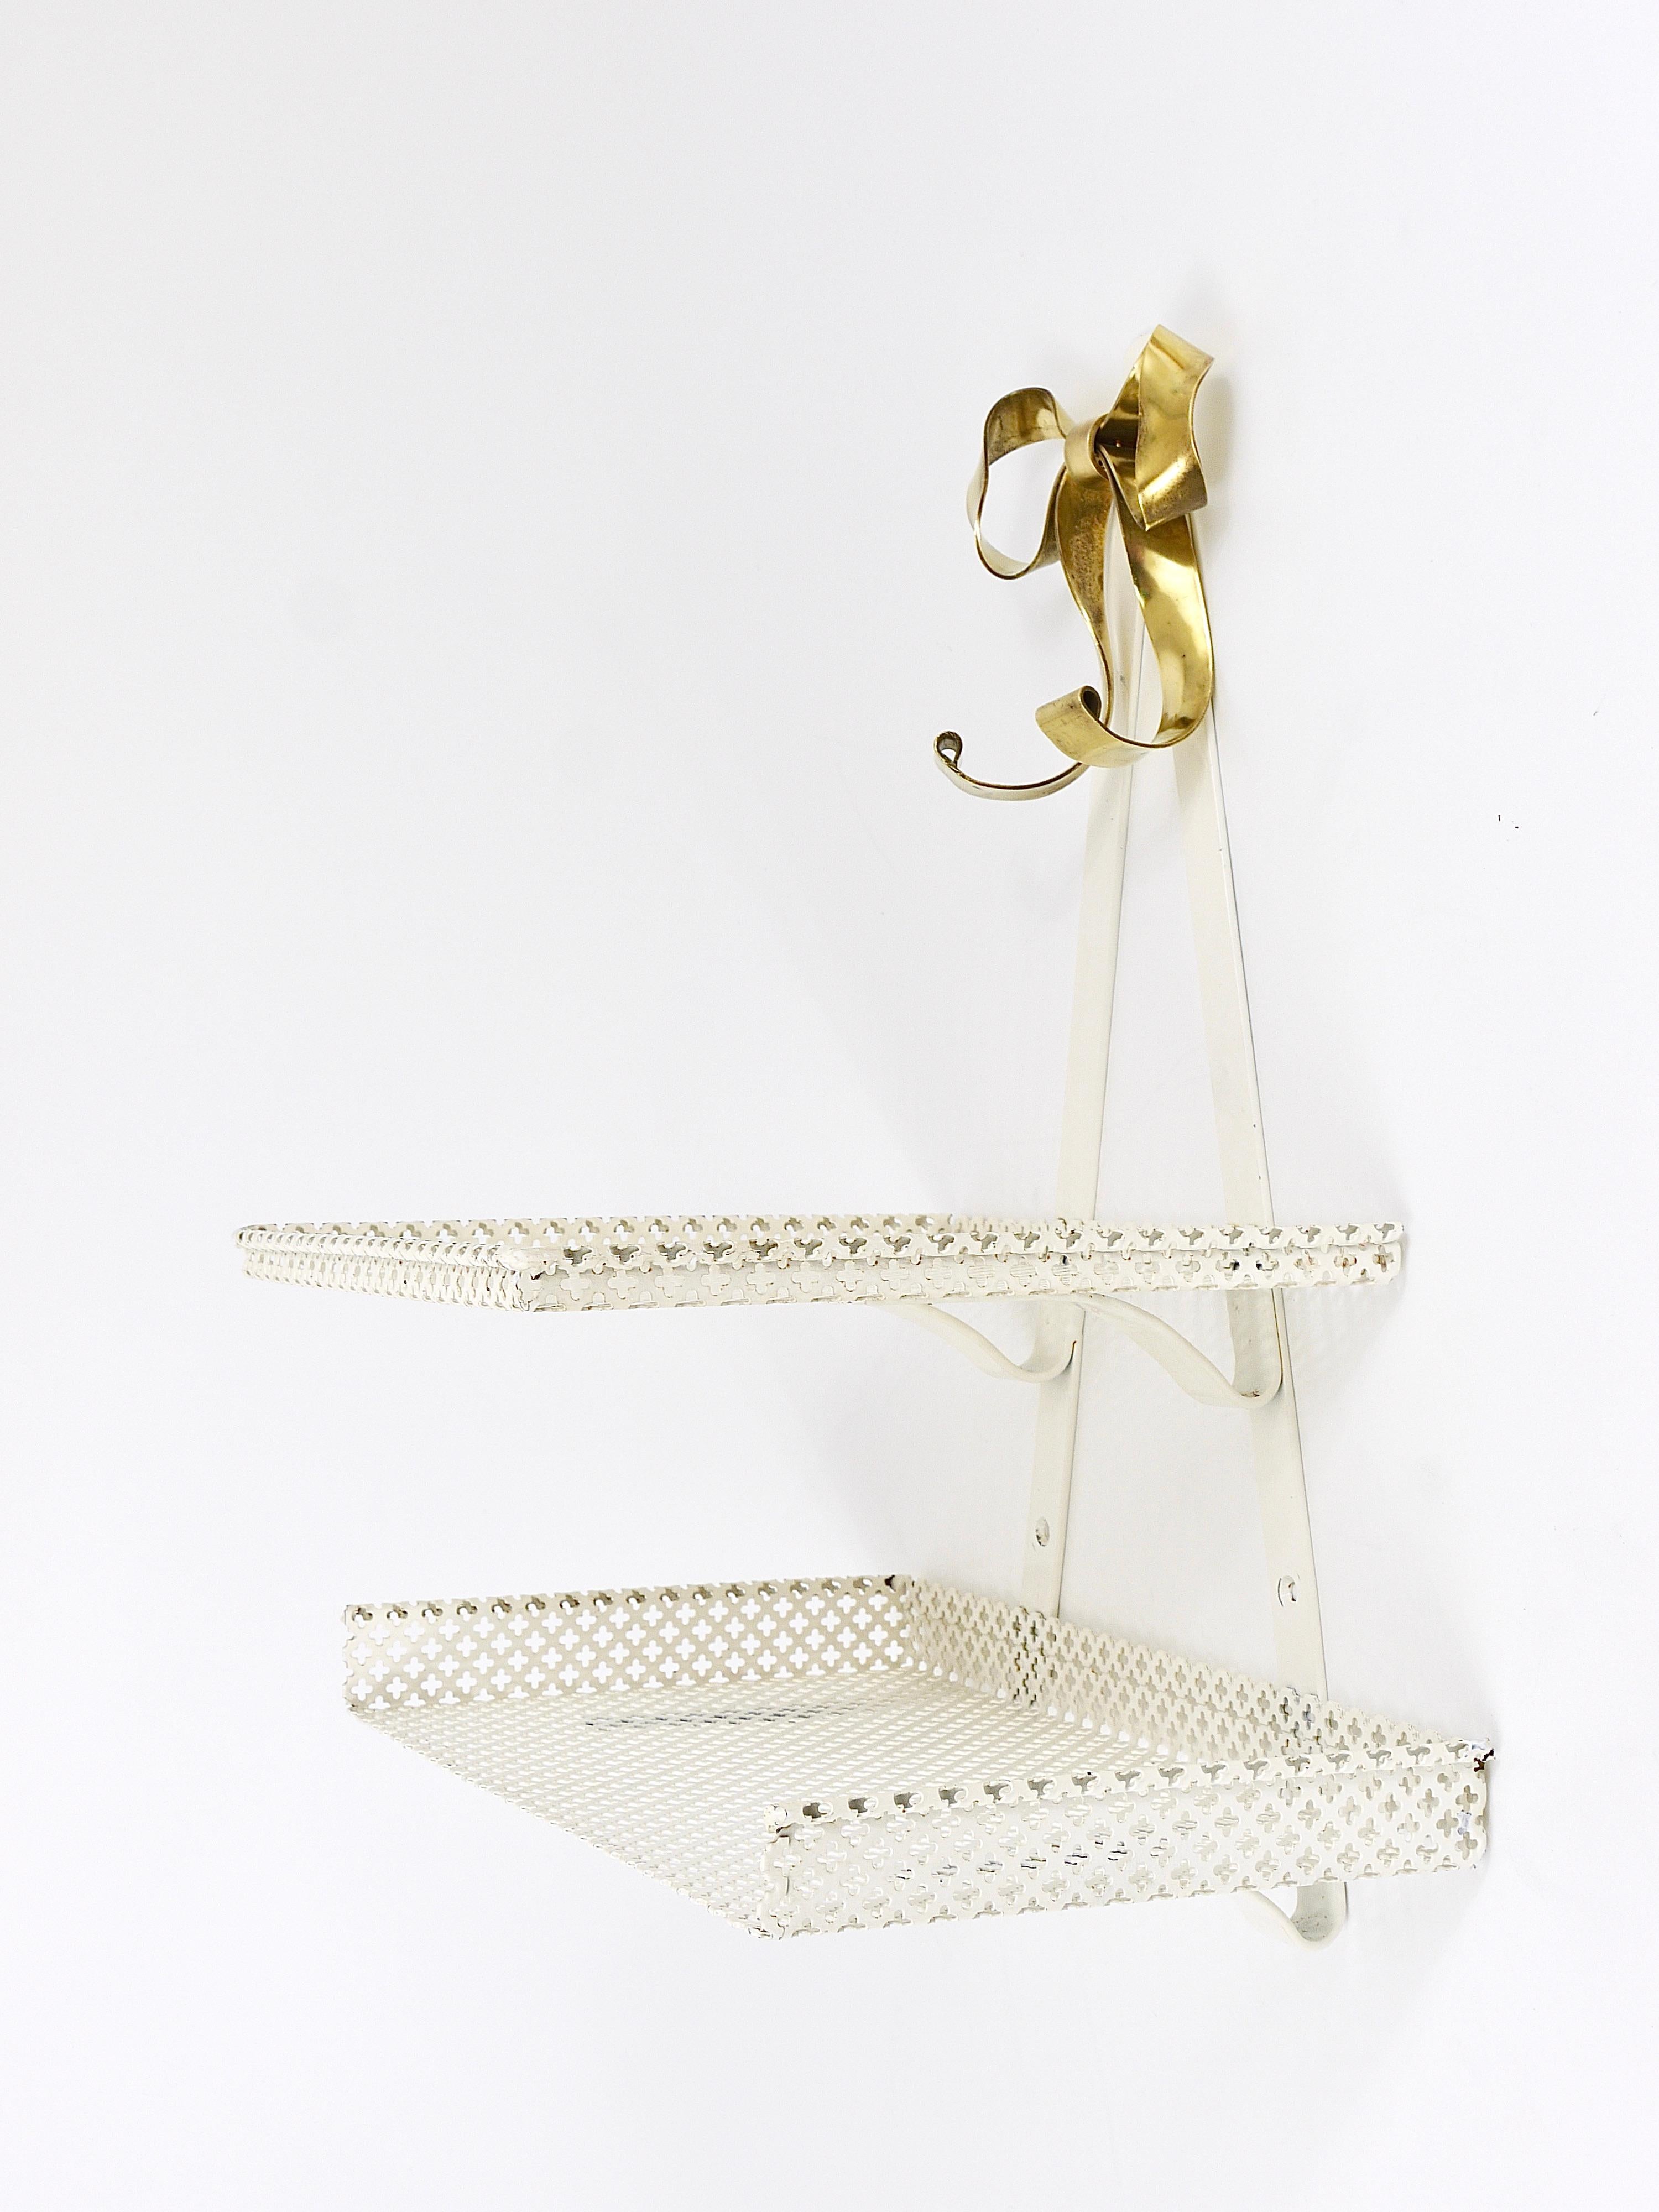 White Perforated Wall Rack Shelf with Brass Ribbon by Vereinigte Werkstätten 4